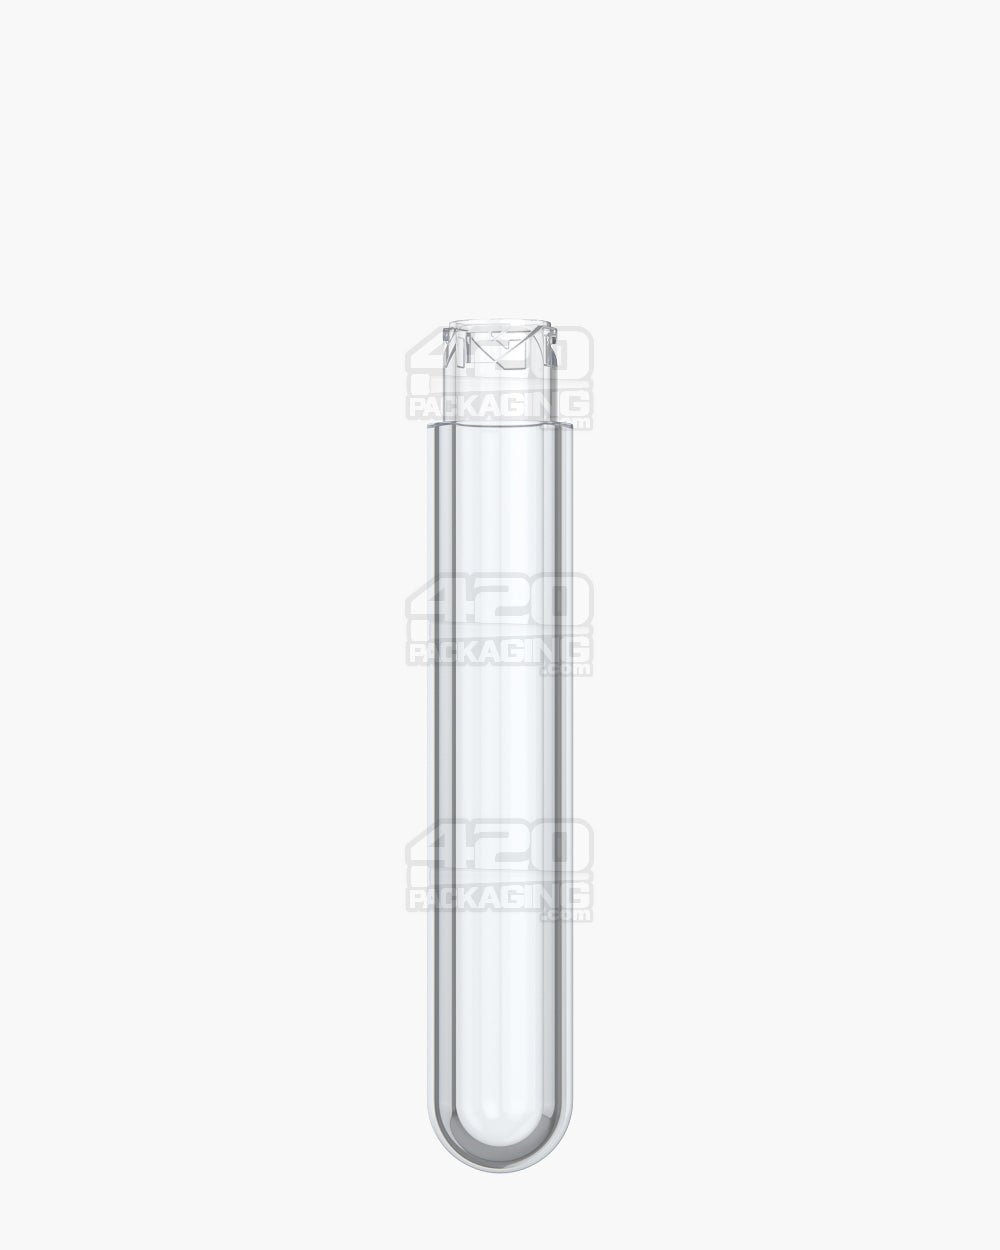 109mm Pollen Gear Transparent Plastic Slim Tube for Pre-Roll & Vaporizer Tube - Clear - 1000/Box - 2